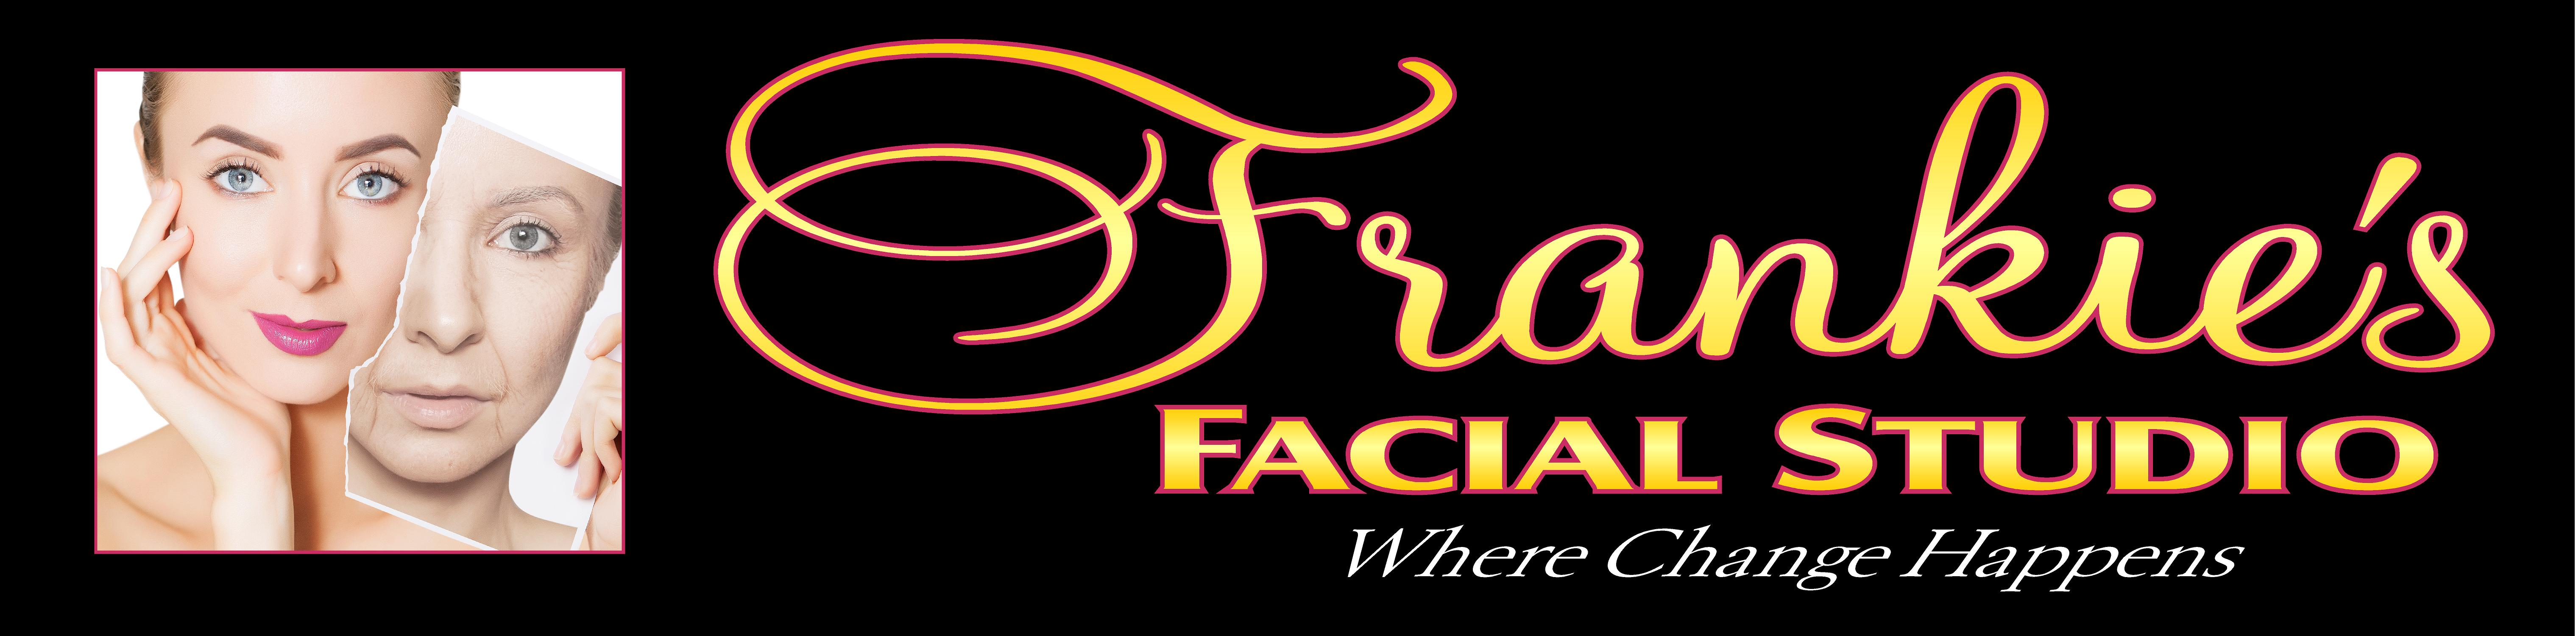 Frankies-Facial-Studio-wall-2.jpg